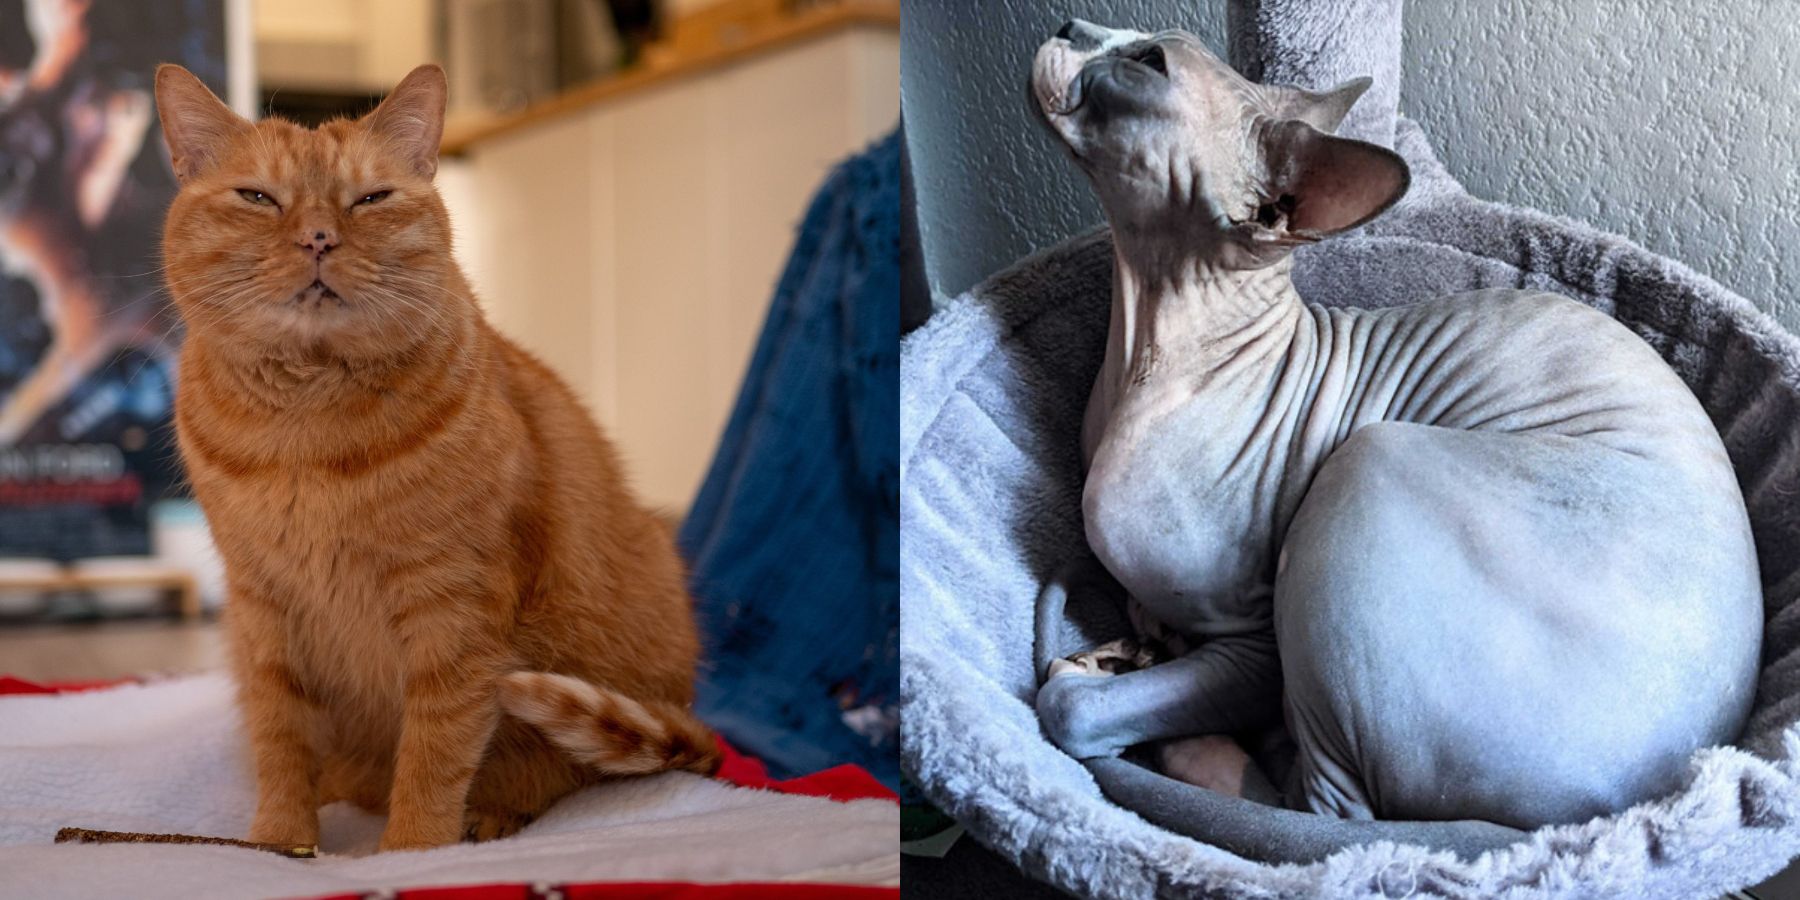 Split image of orange tabby and sphinx cat.